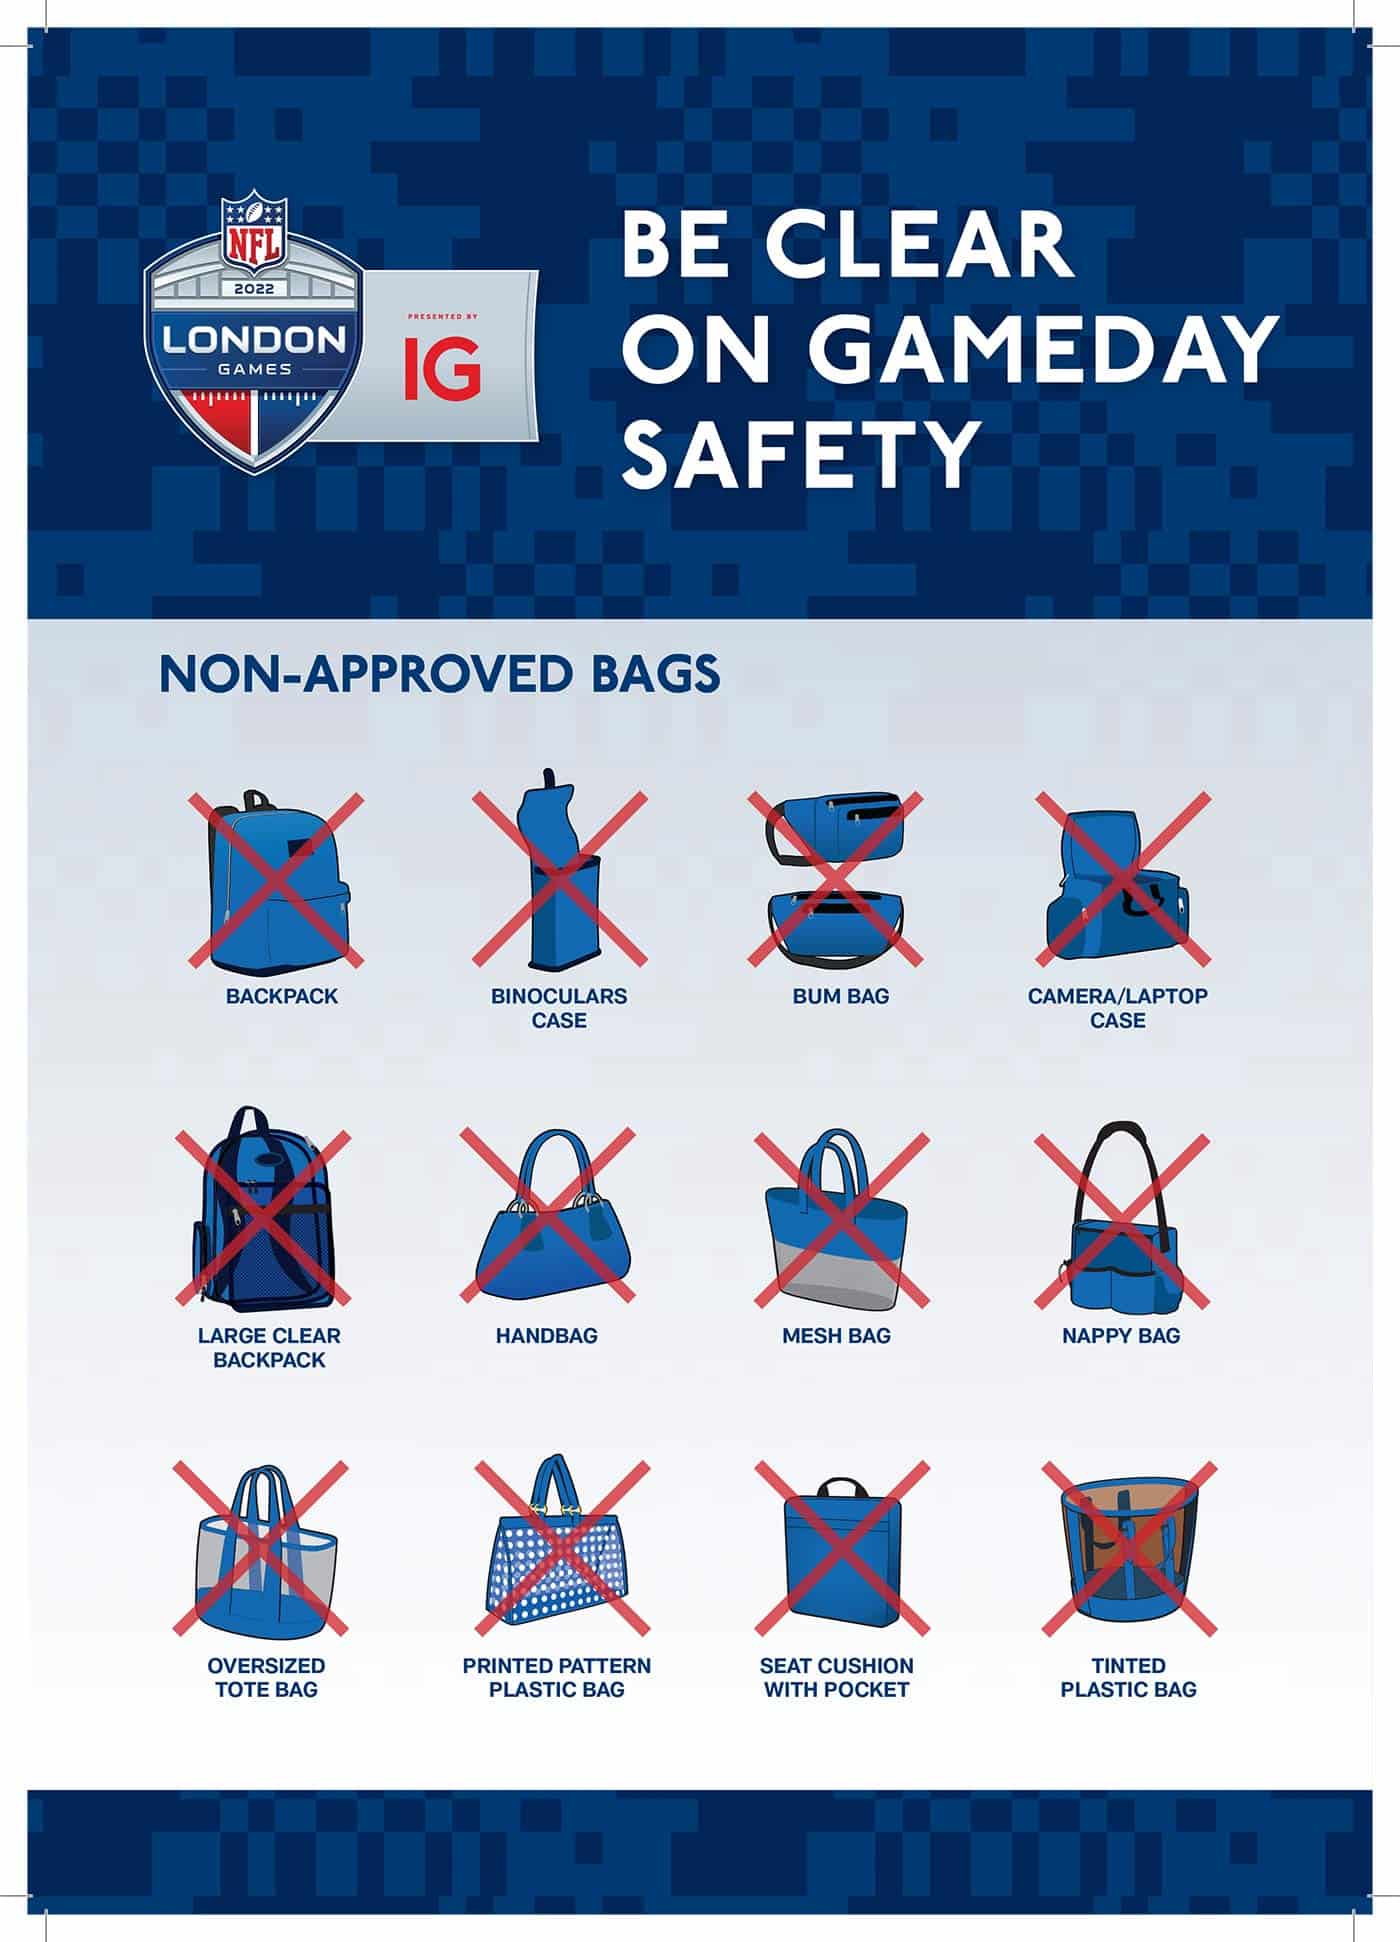 NFL bag policy.  Nfl bag, Stadium bag, Football bag